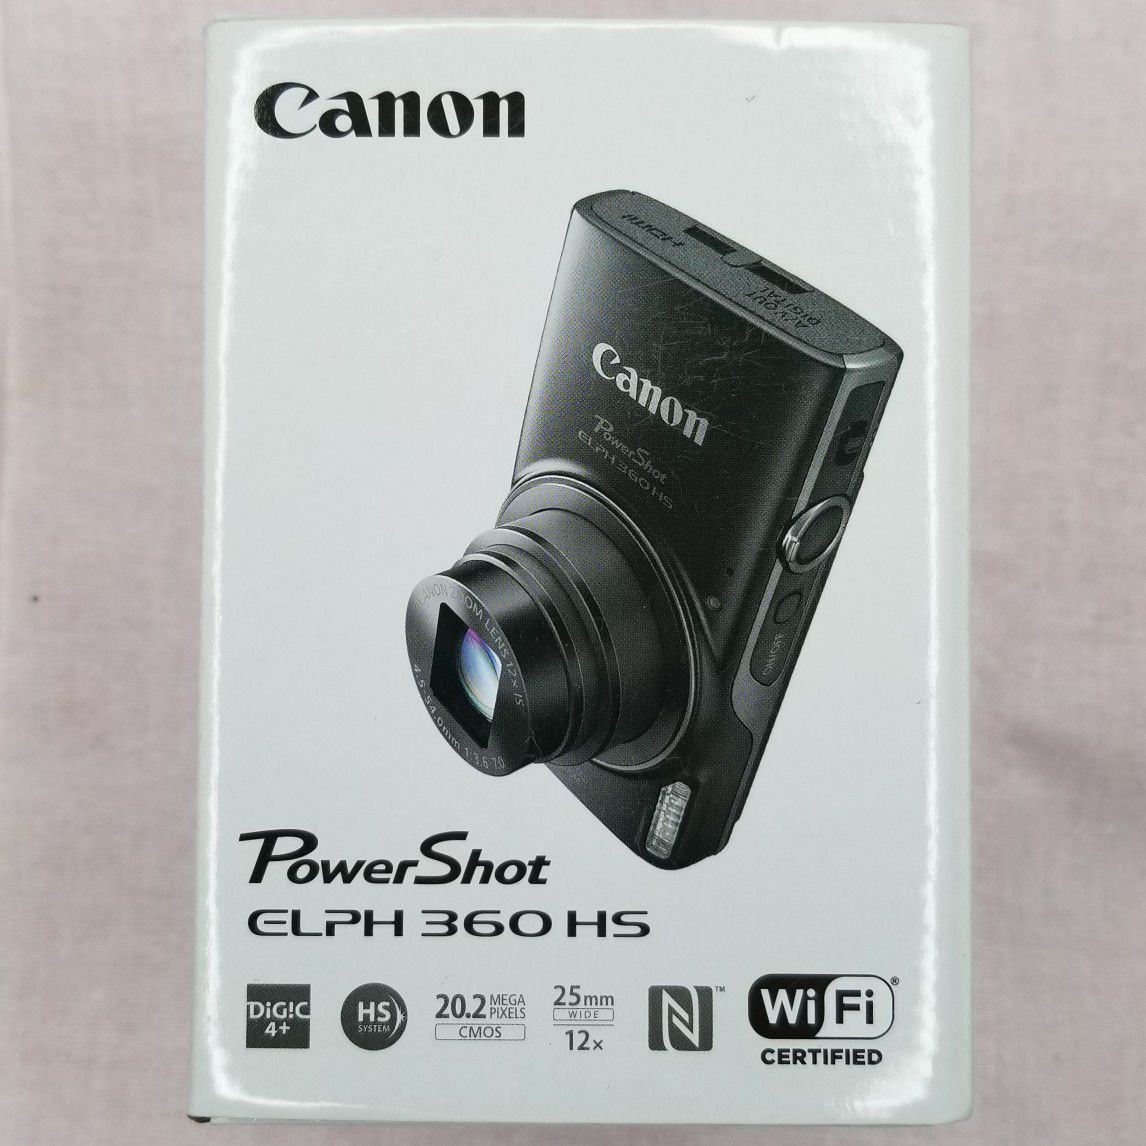 Canon PowerShot ELPH 360 HS 20.2MPX Wi-Fi Digital Camera - Silver